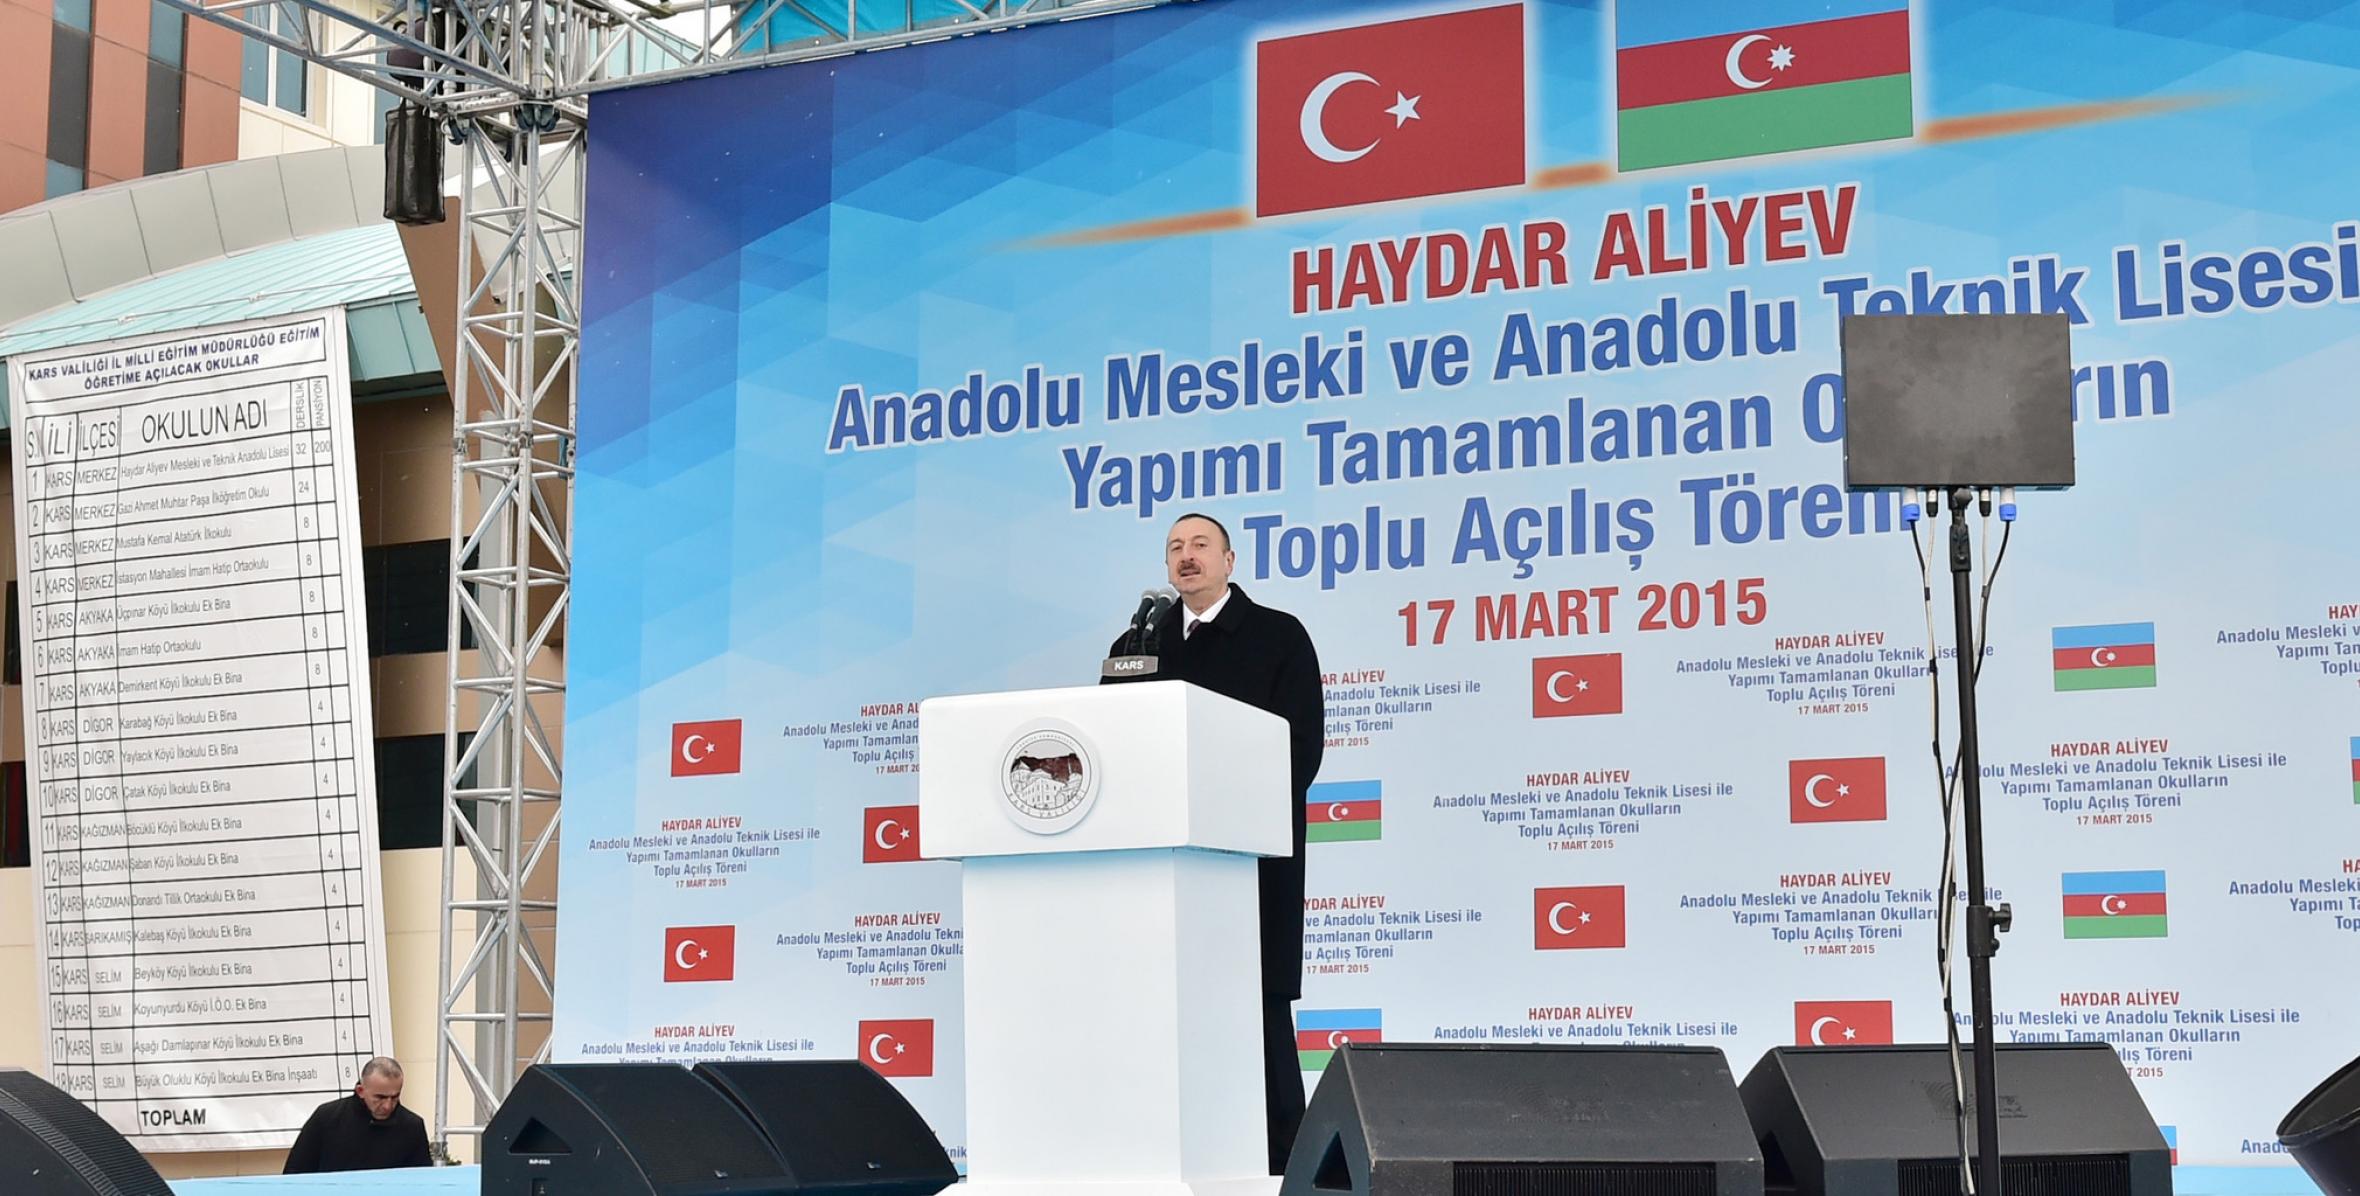 Speech by Ilham Aliyev at the opening of Anadolu technical-vocational lyceum named after Heydar Aliyev in Kars